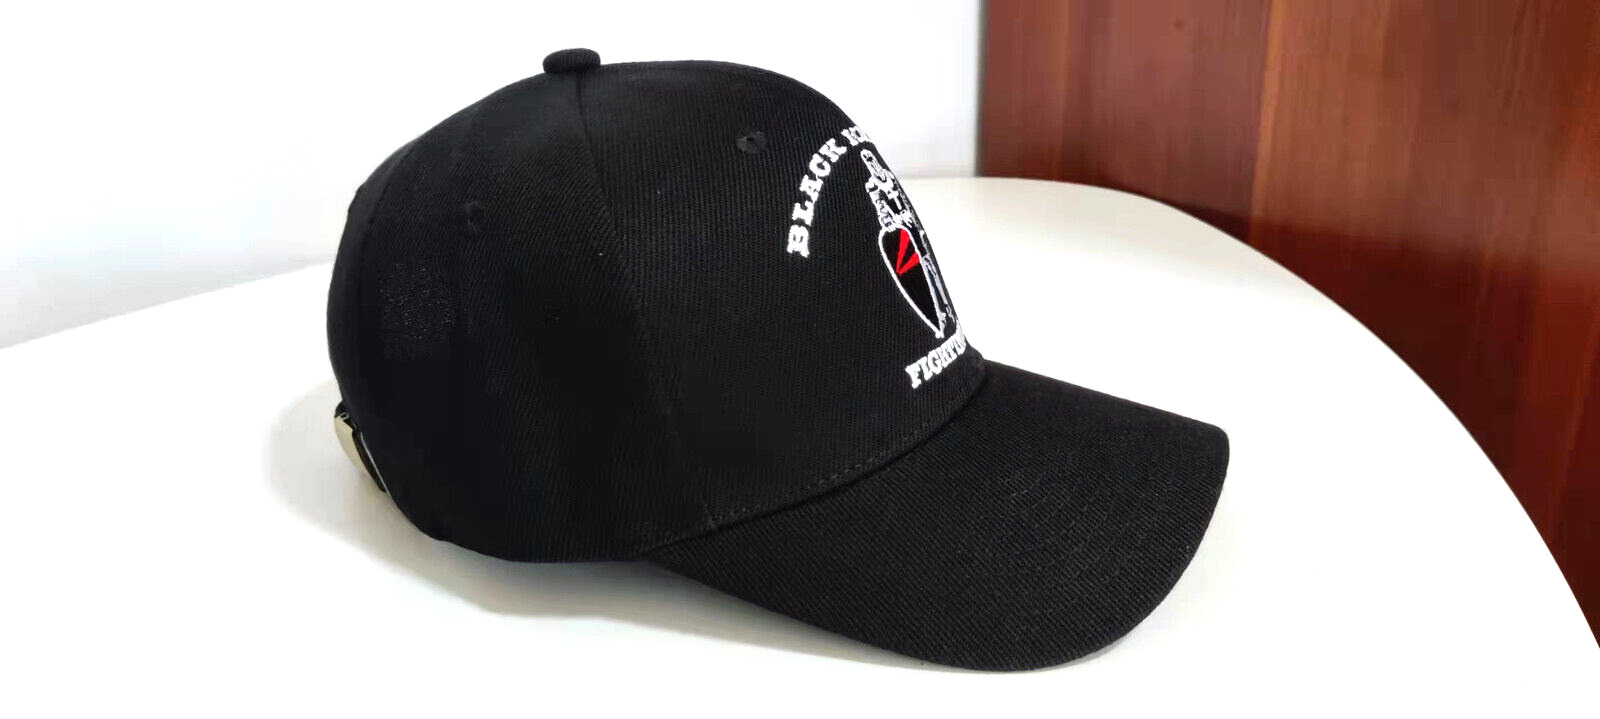 USN VF-154 Black Knights Embroidered Baseball Hat Cap F14 Tomcat